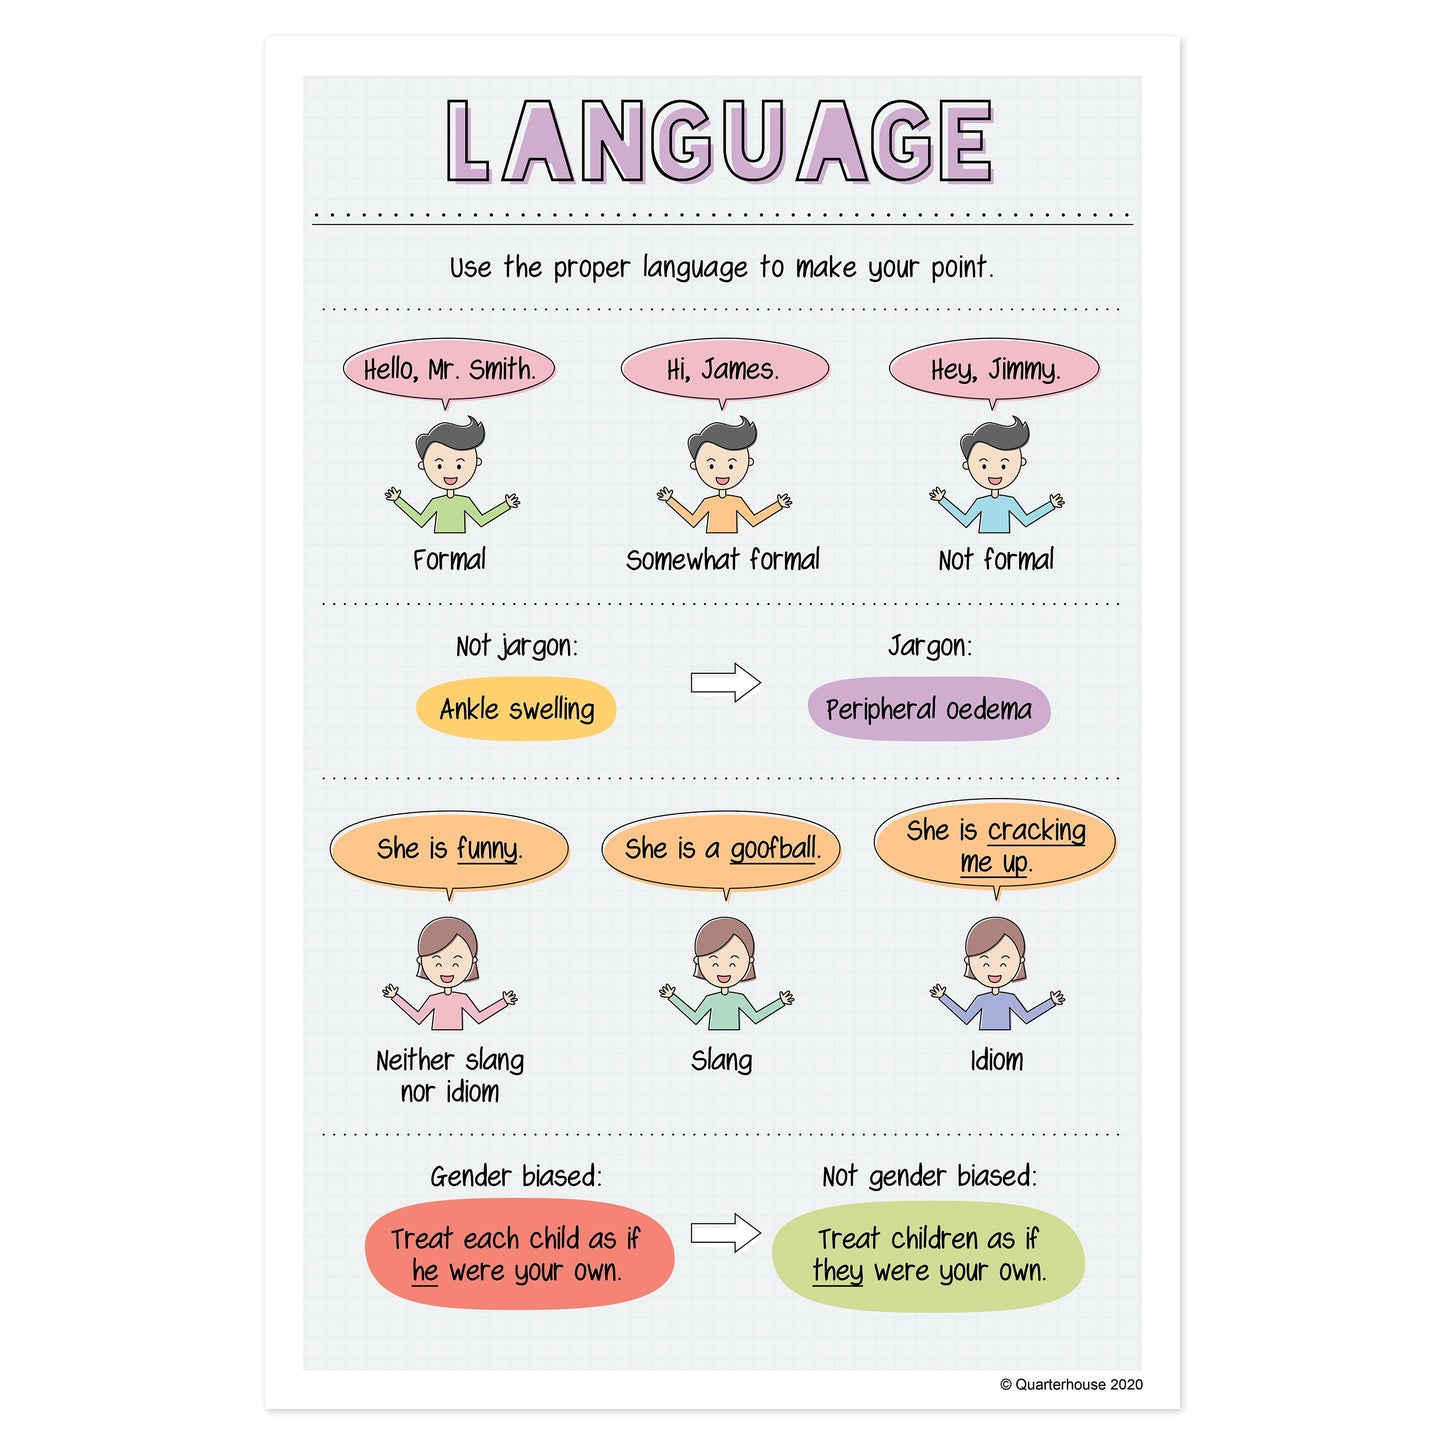 Quarterhouse Language in Writing Poster, English-Language Arts Classroom Materials for Teachers